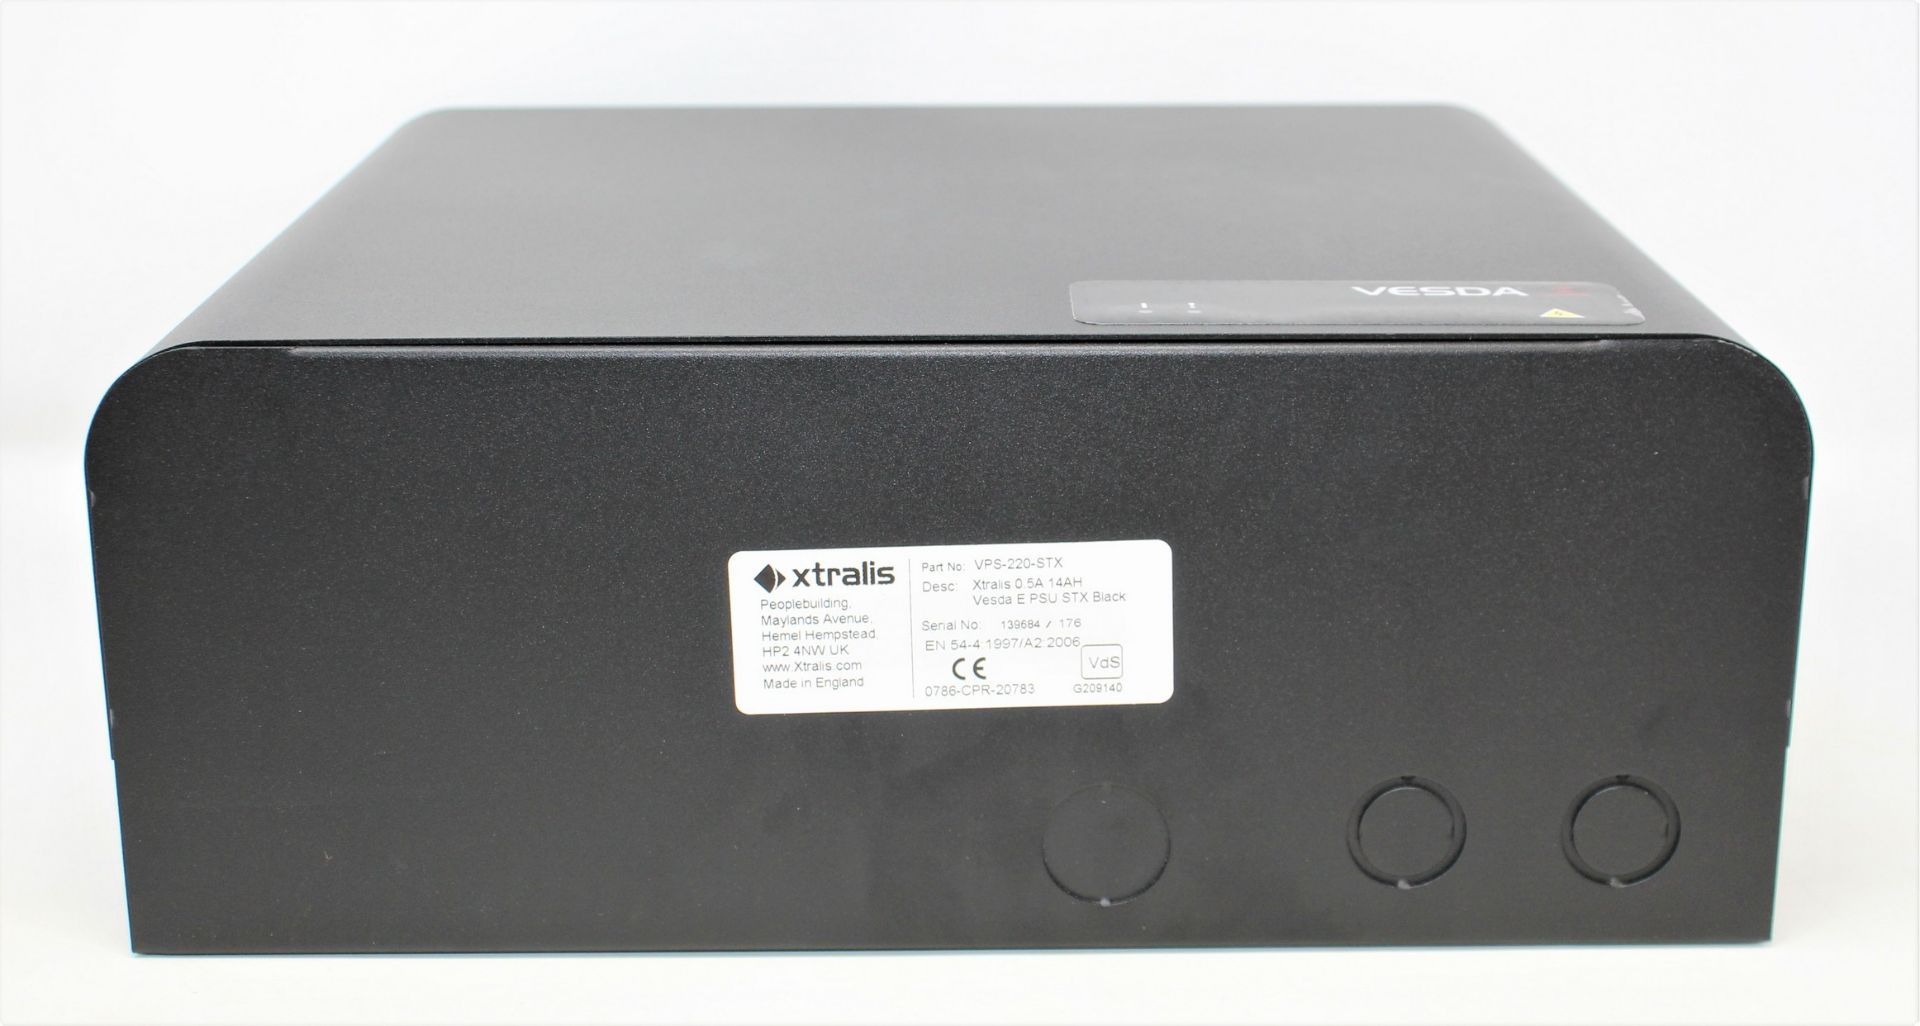 Two boxed as new Vesda Xtralis VPS-220-STX VESDA-E Power Supply Units in Black (1 x box opened, 1